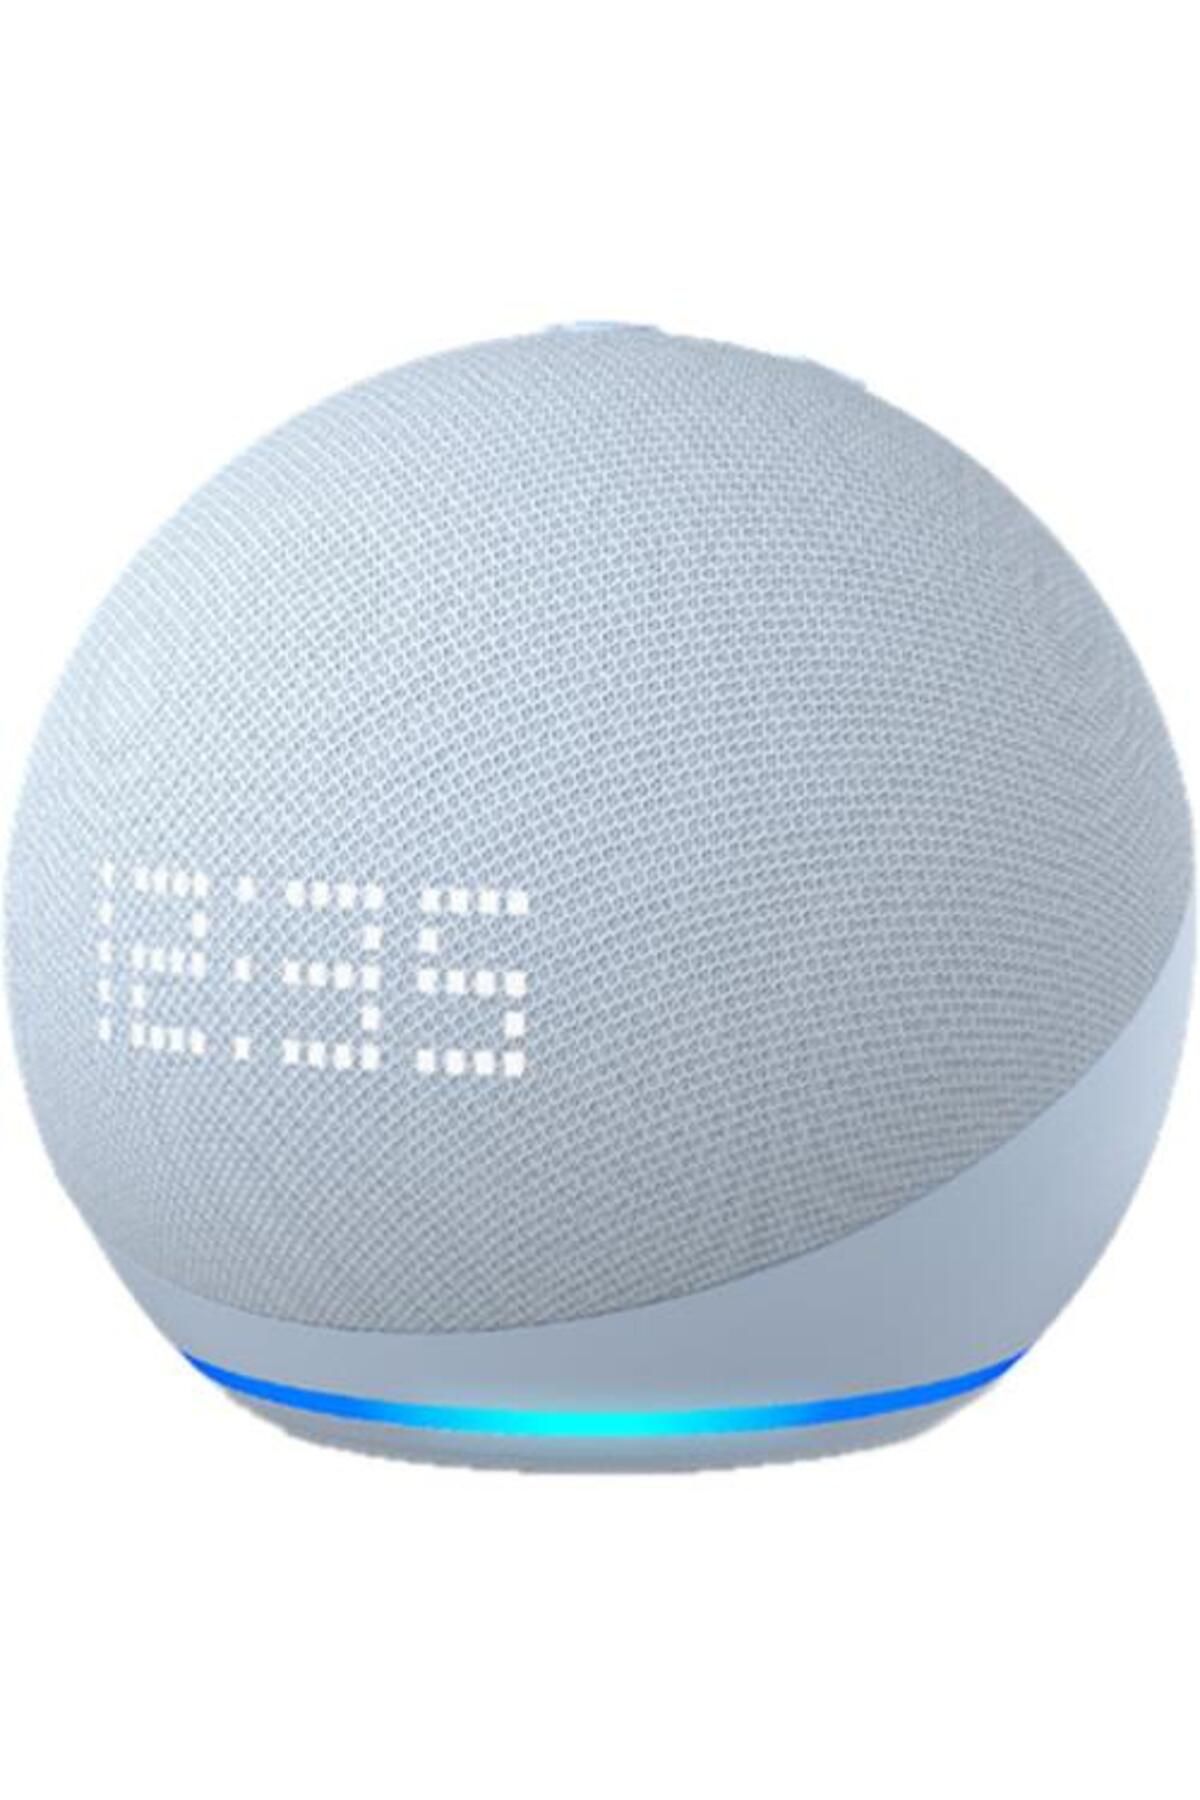 Amazon Echo Dot 5. Generation Saatli Mavi